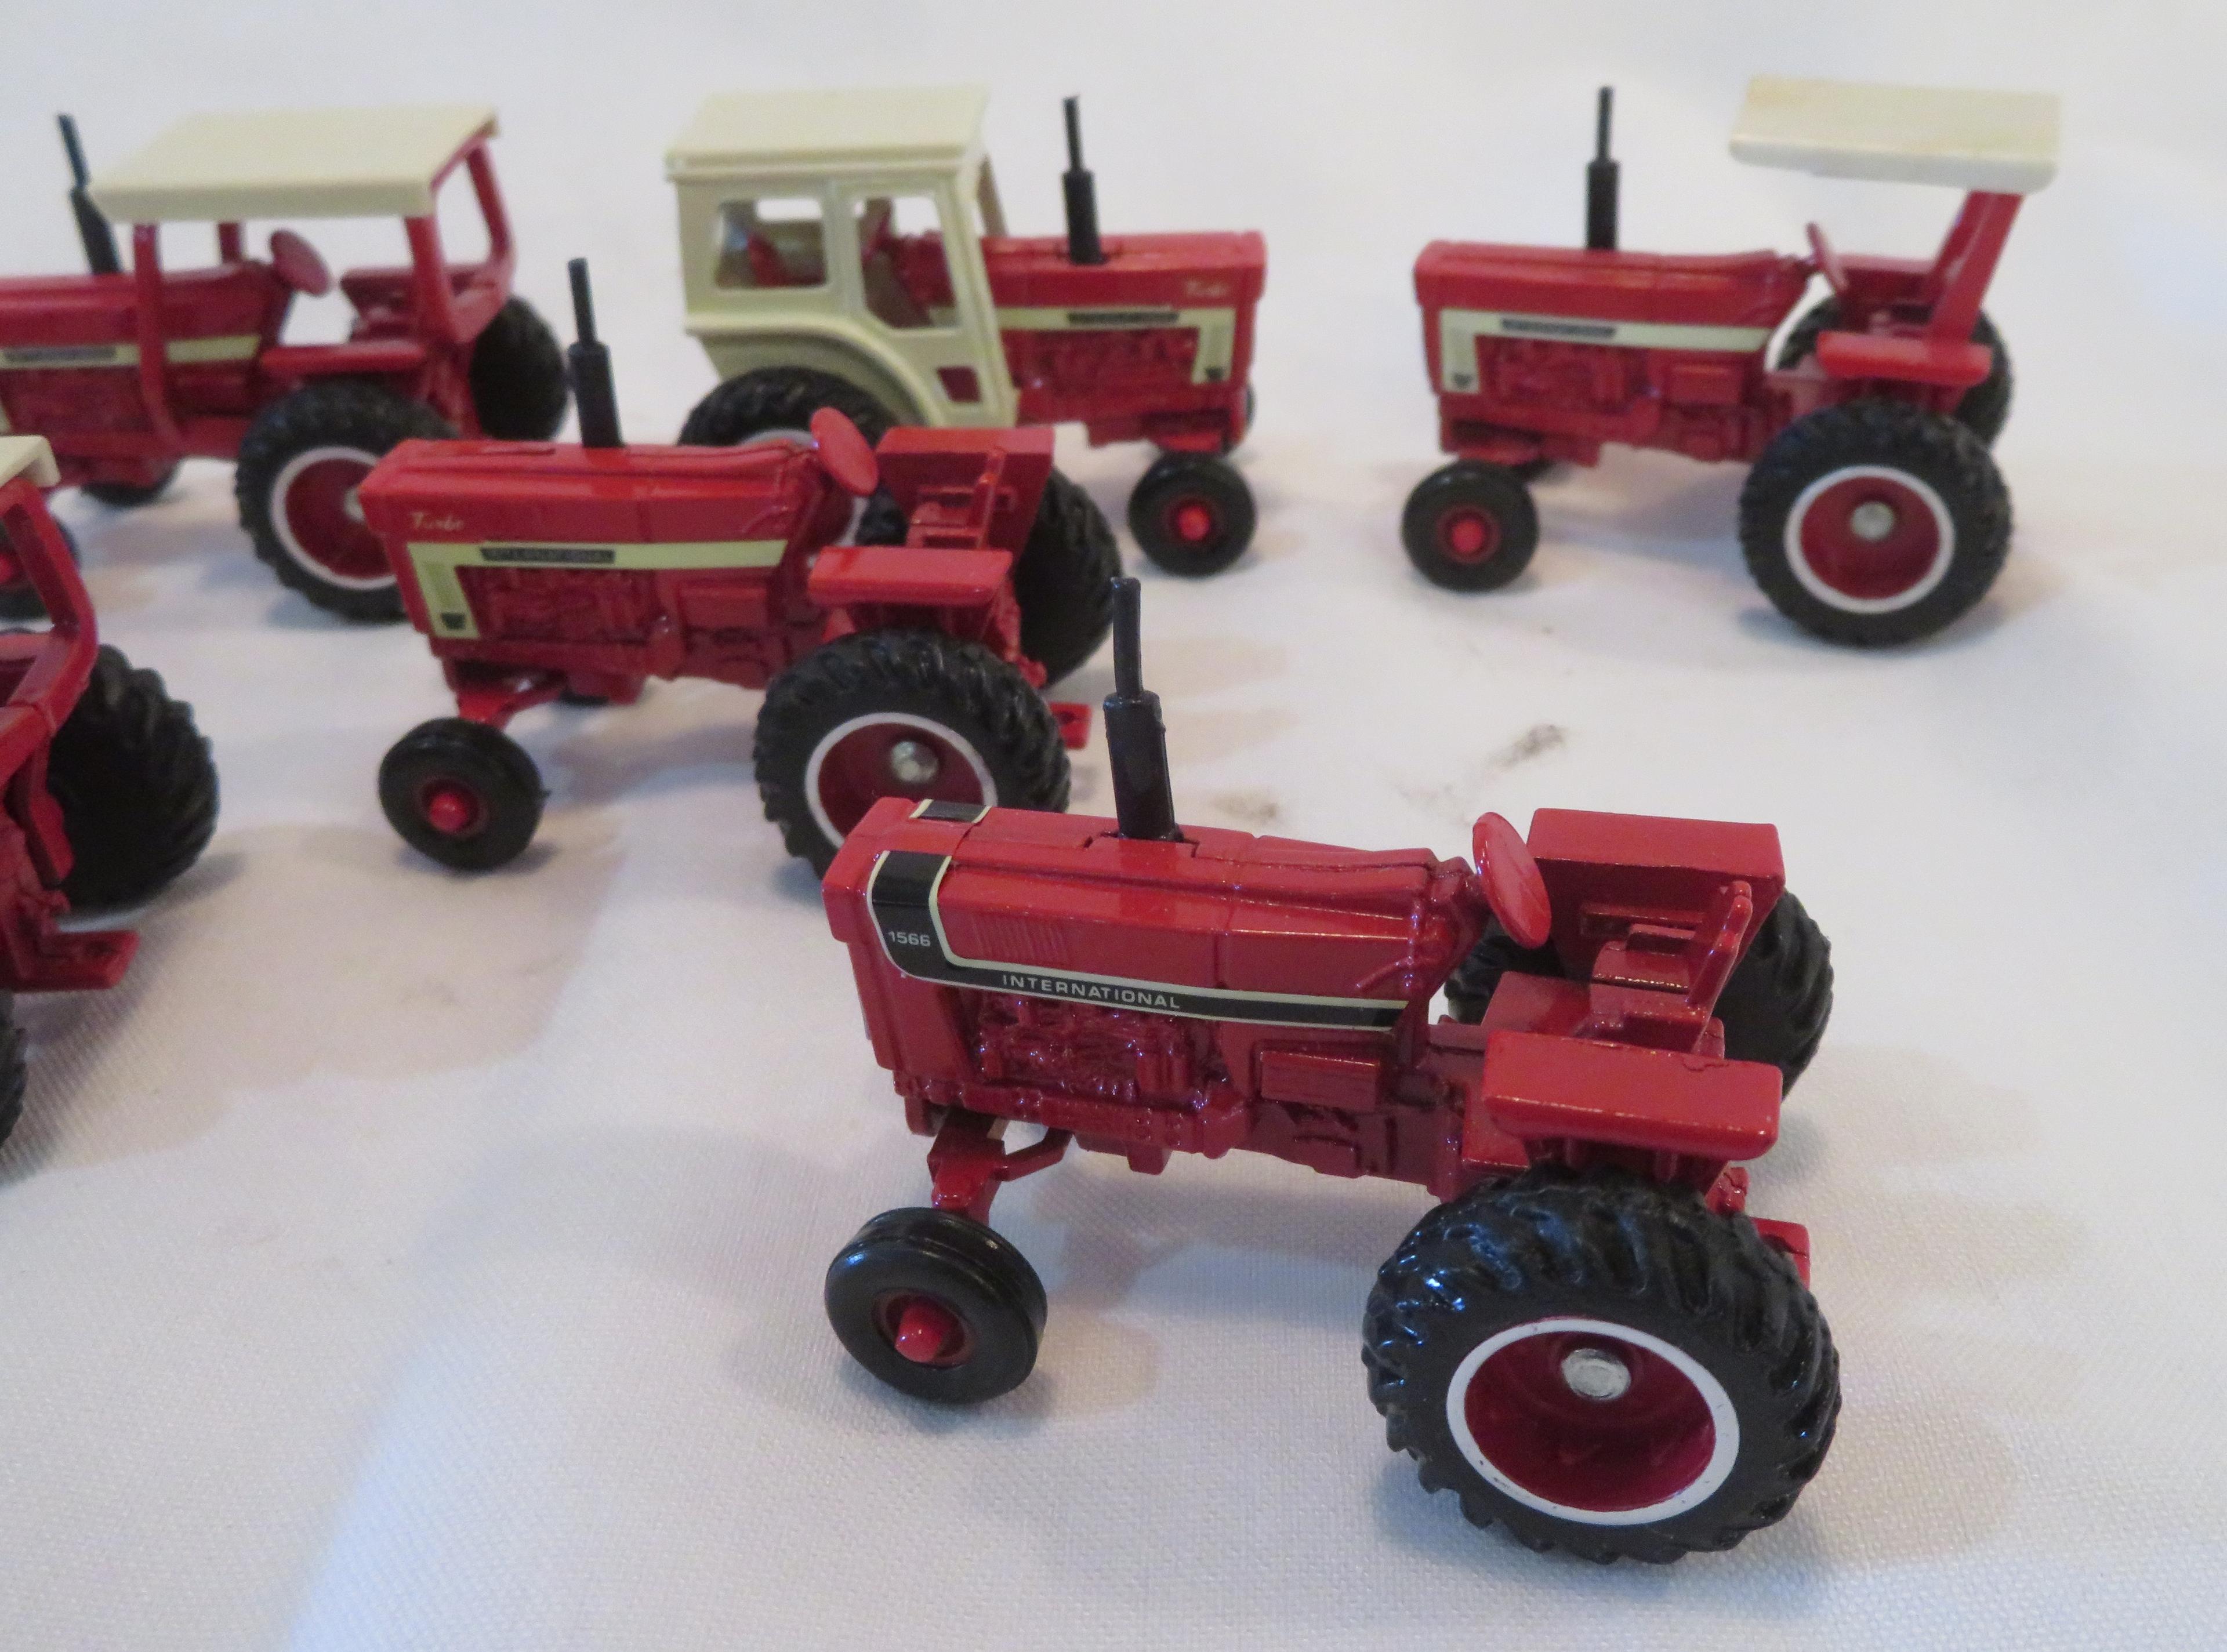 (10) IH Tractors -- 1/64 Scale